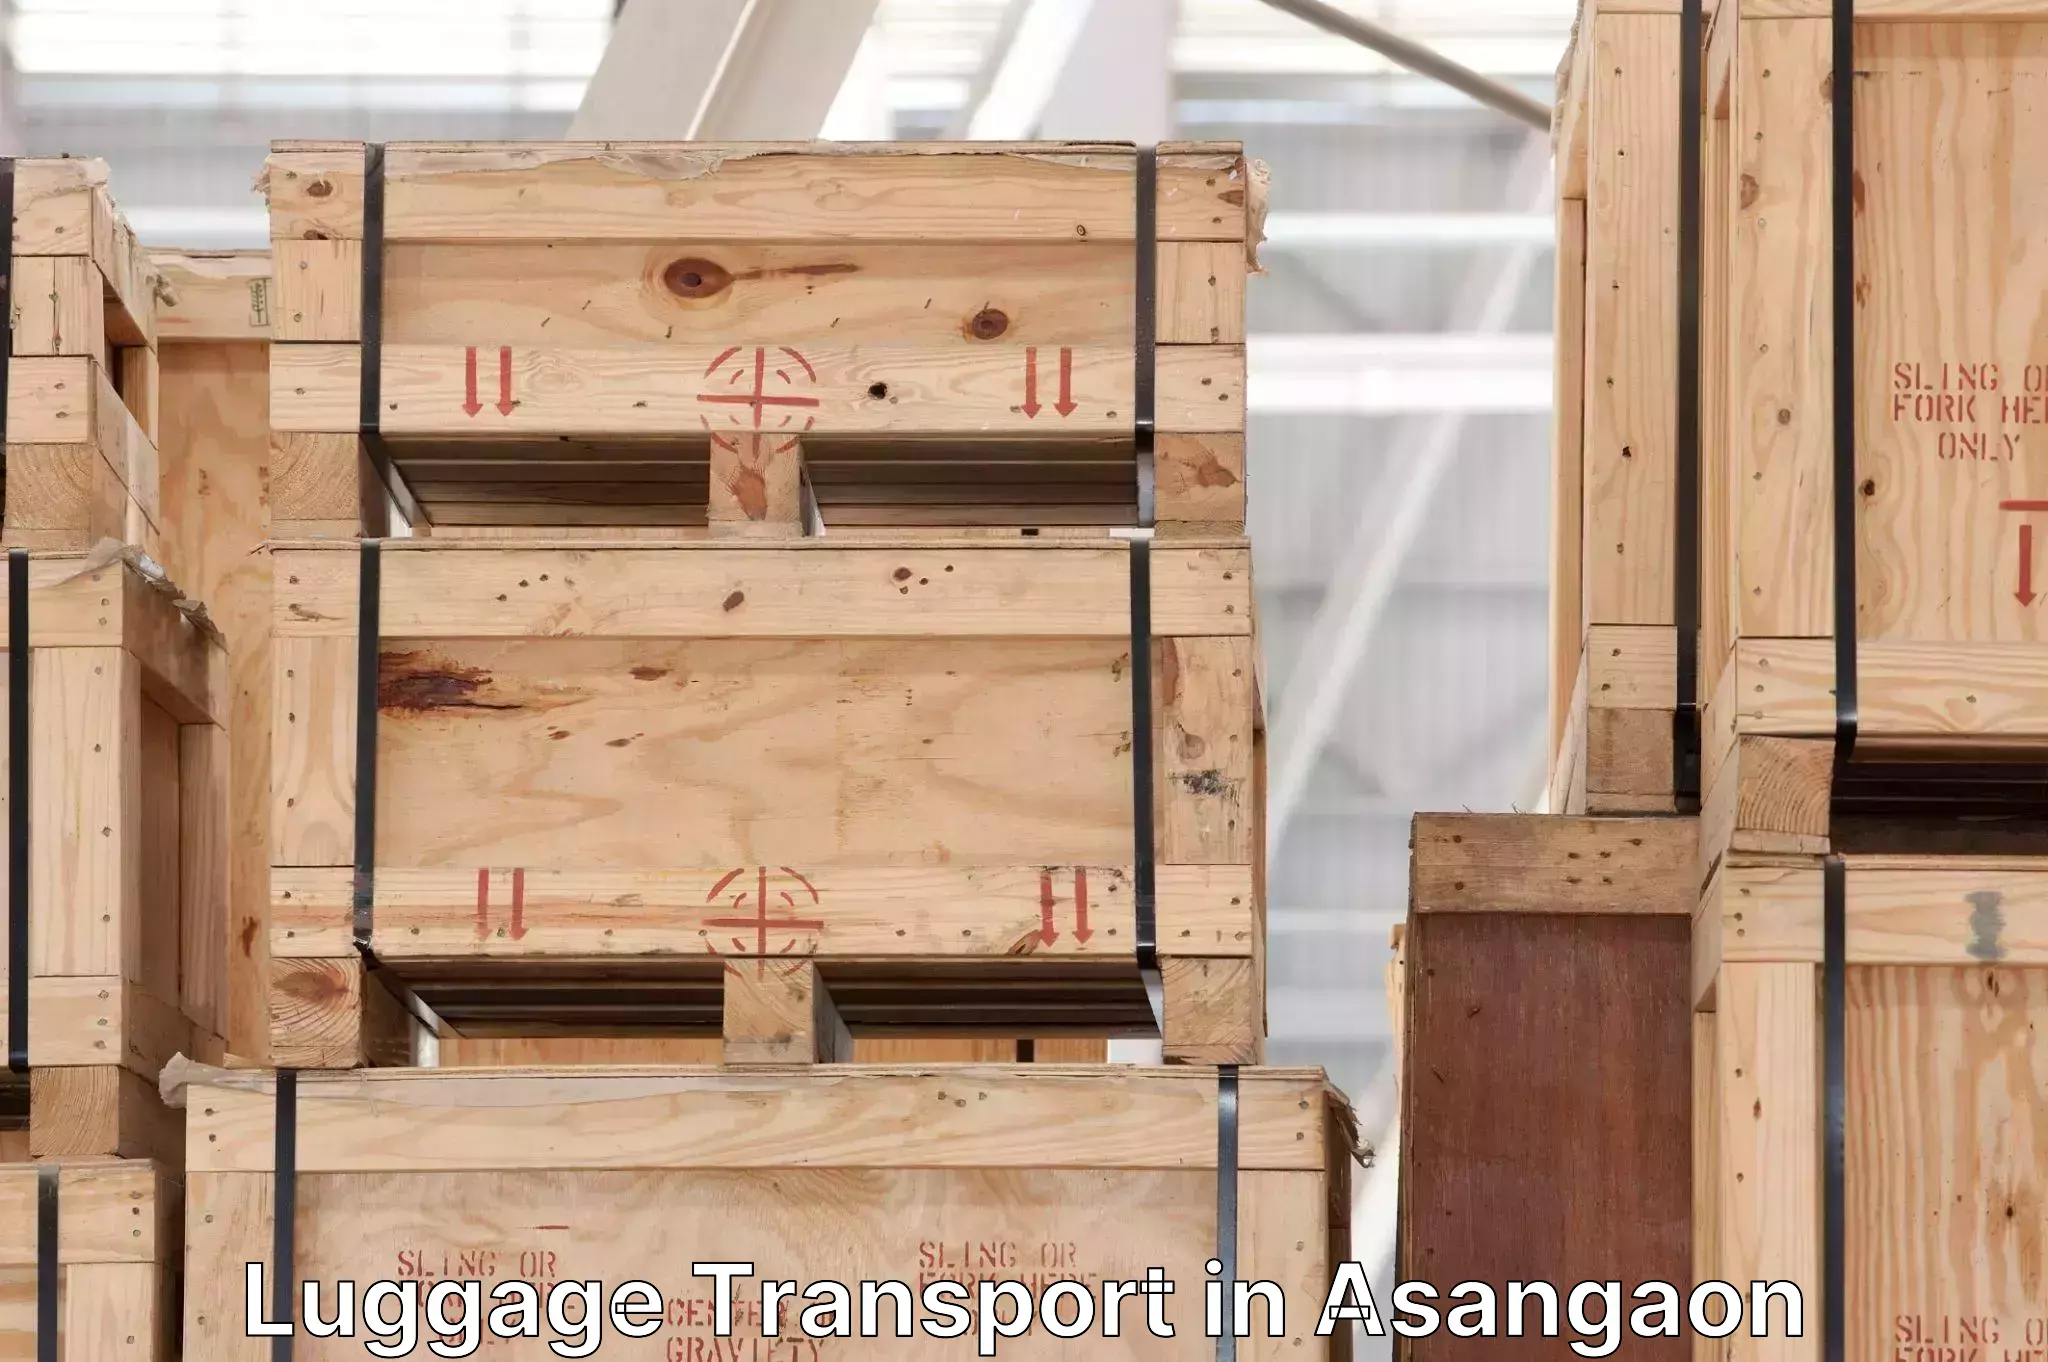 Luggage forwarding service in Asangaon